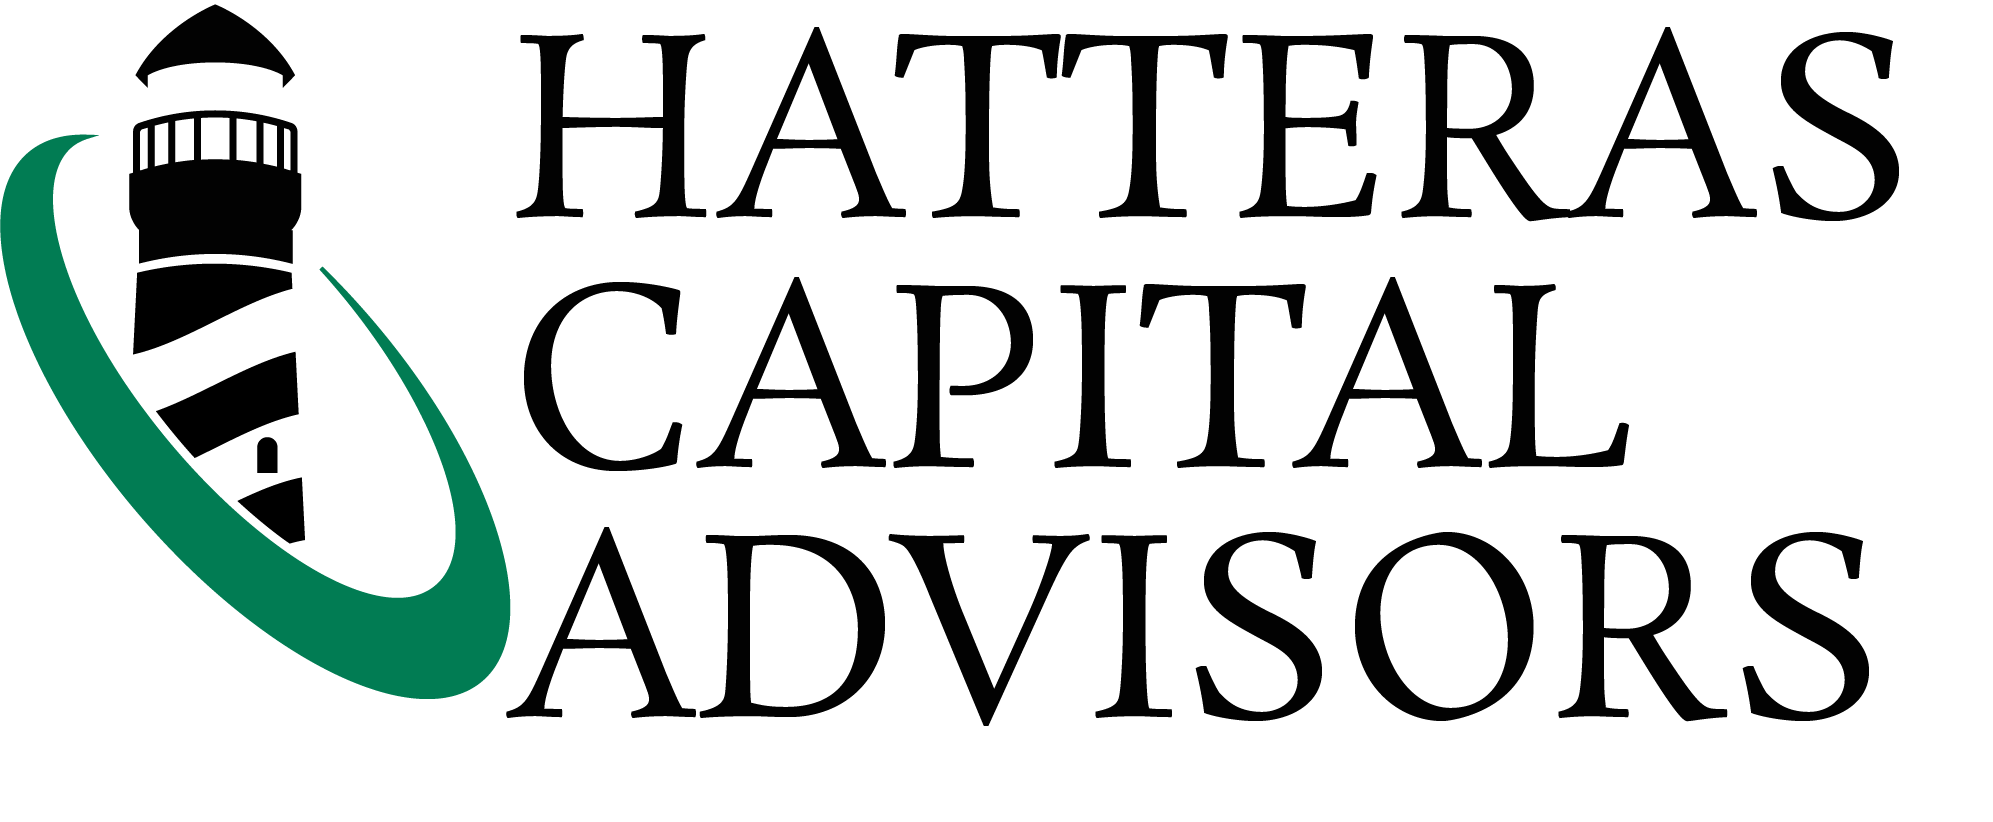 Hatteras Capital Advisors